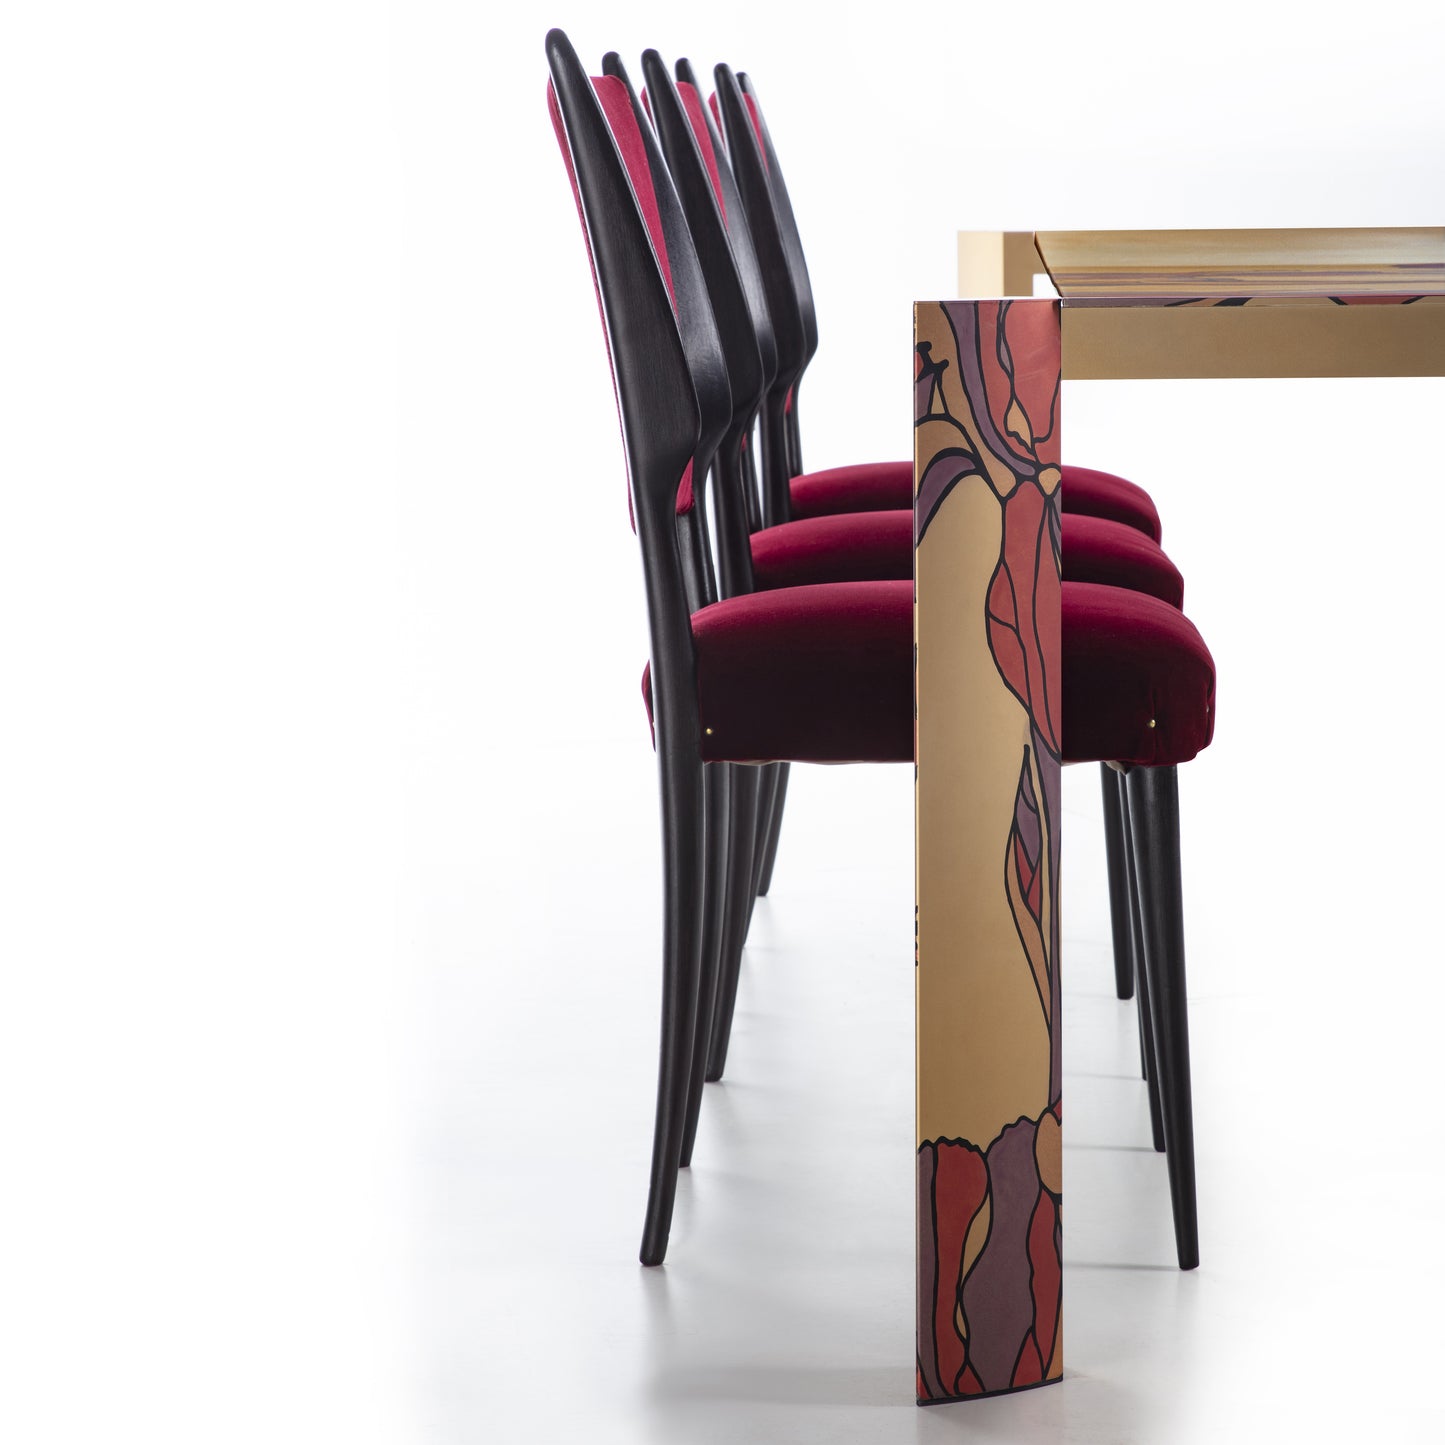 Vintage Velvet Chair Bordeaux Red Black Wood